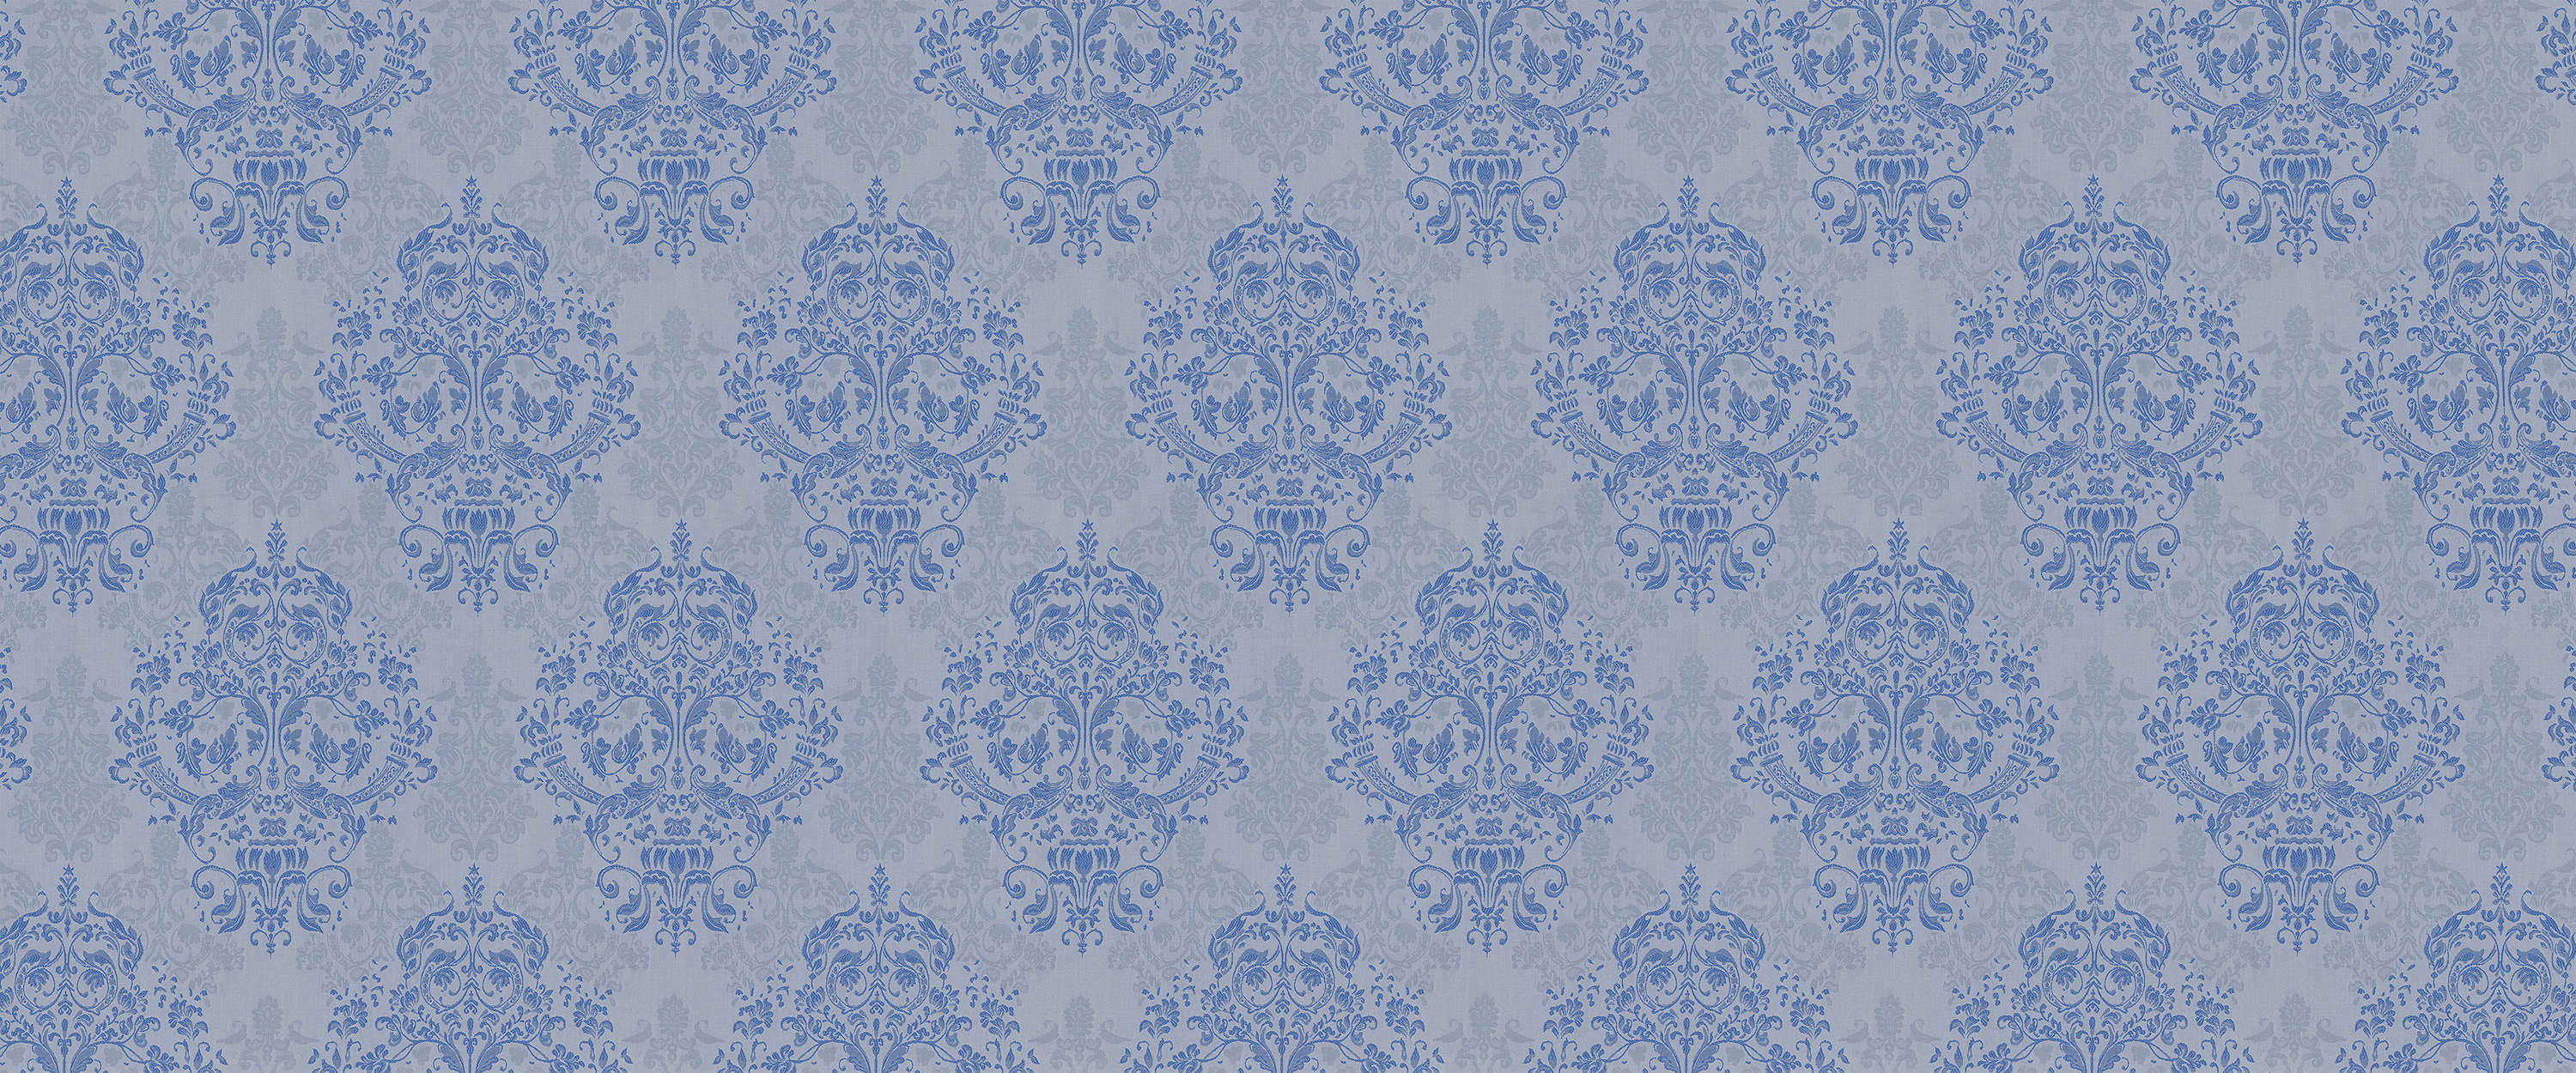             Barock Fototapete Blau & Grau mit Ornament Design
        